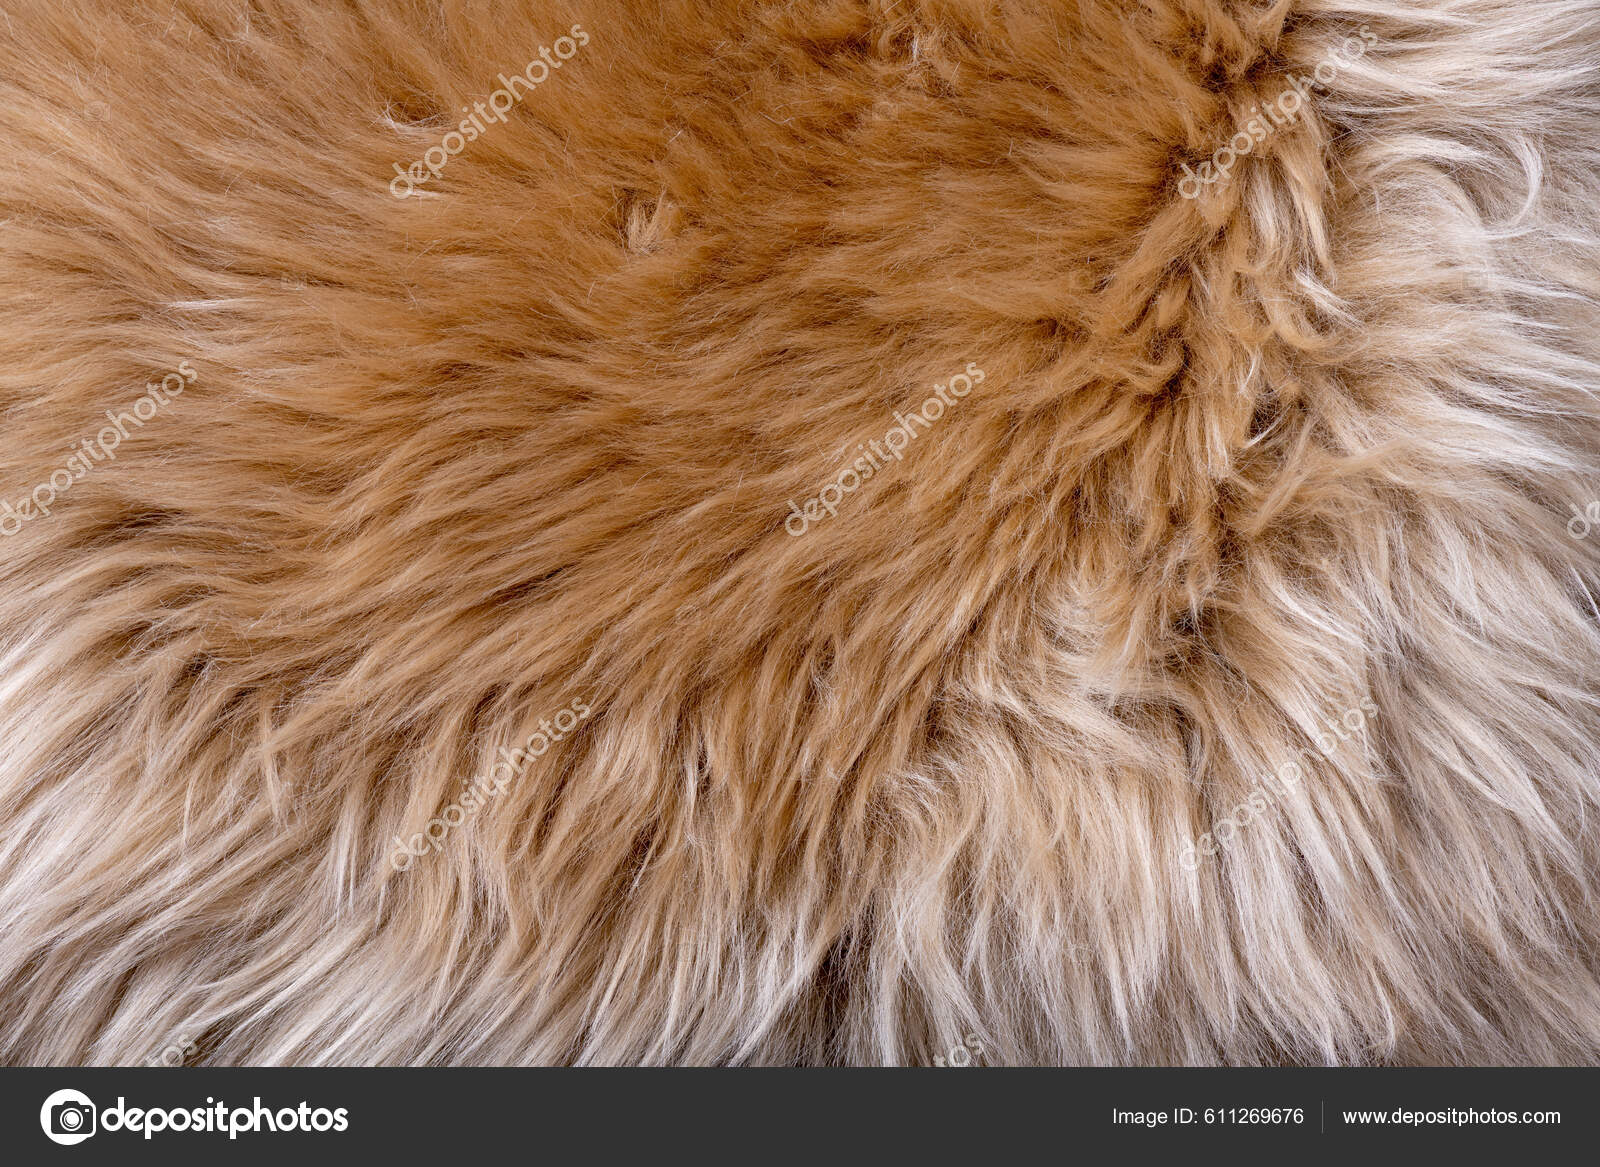 Fur texture top view. Brown fur background. Fur pattern. Texture of brown  shaggy fur. Wool texture. Flaffy sheepskin fur close up Stock Photo